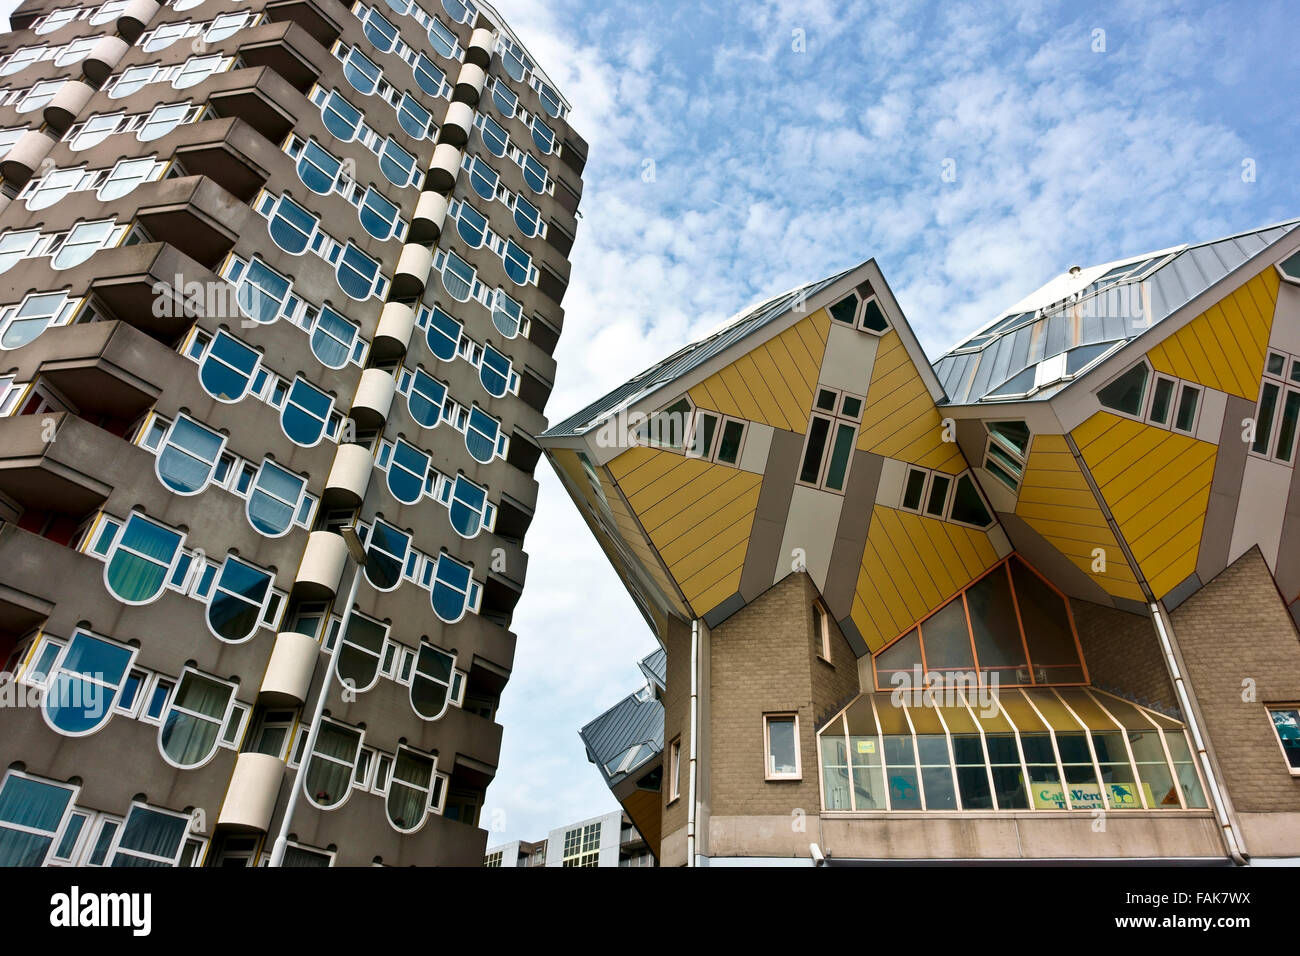 Case Cubiche o Kubuswoningen (Kijk Kubus), progettato dall'architetto Piet Blom. Edificio a matita. Architettura. Blaak, Rotterdam, Paesi Bassi, Europa Foto Stock